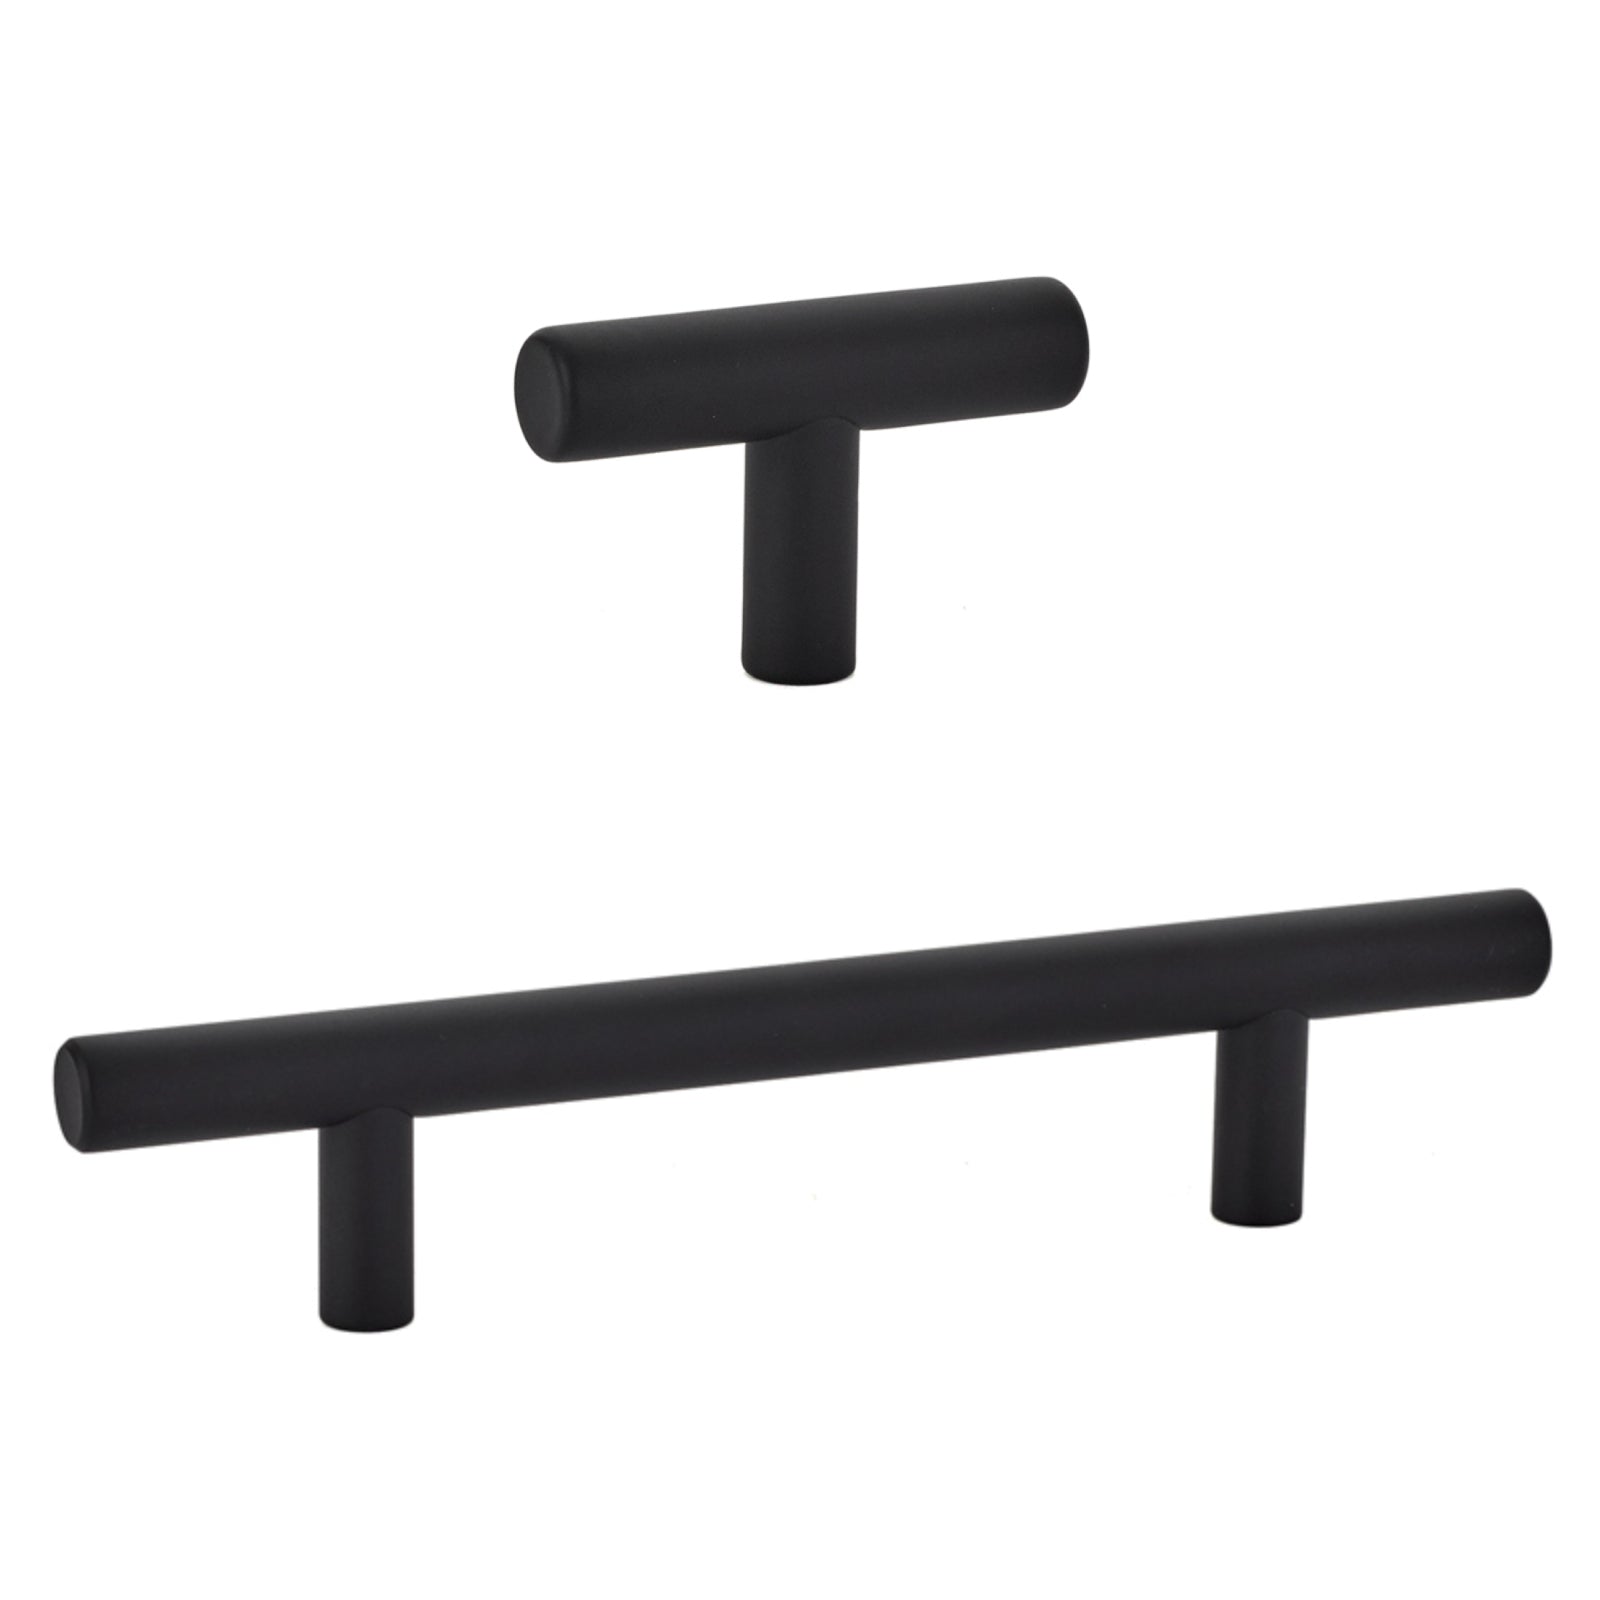 T-Bar "European" Matte Black Cabinet Knobs and Pulls - Industry Hardware